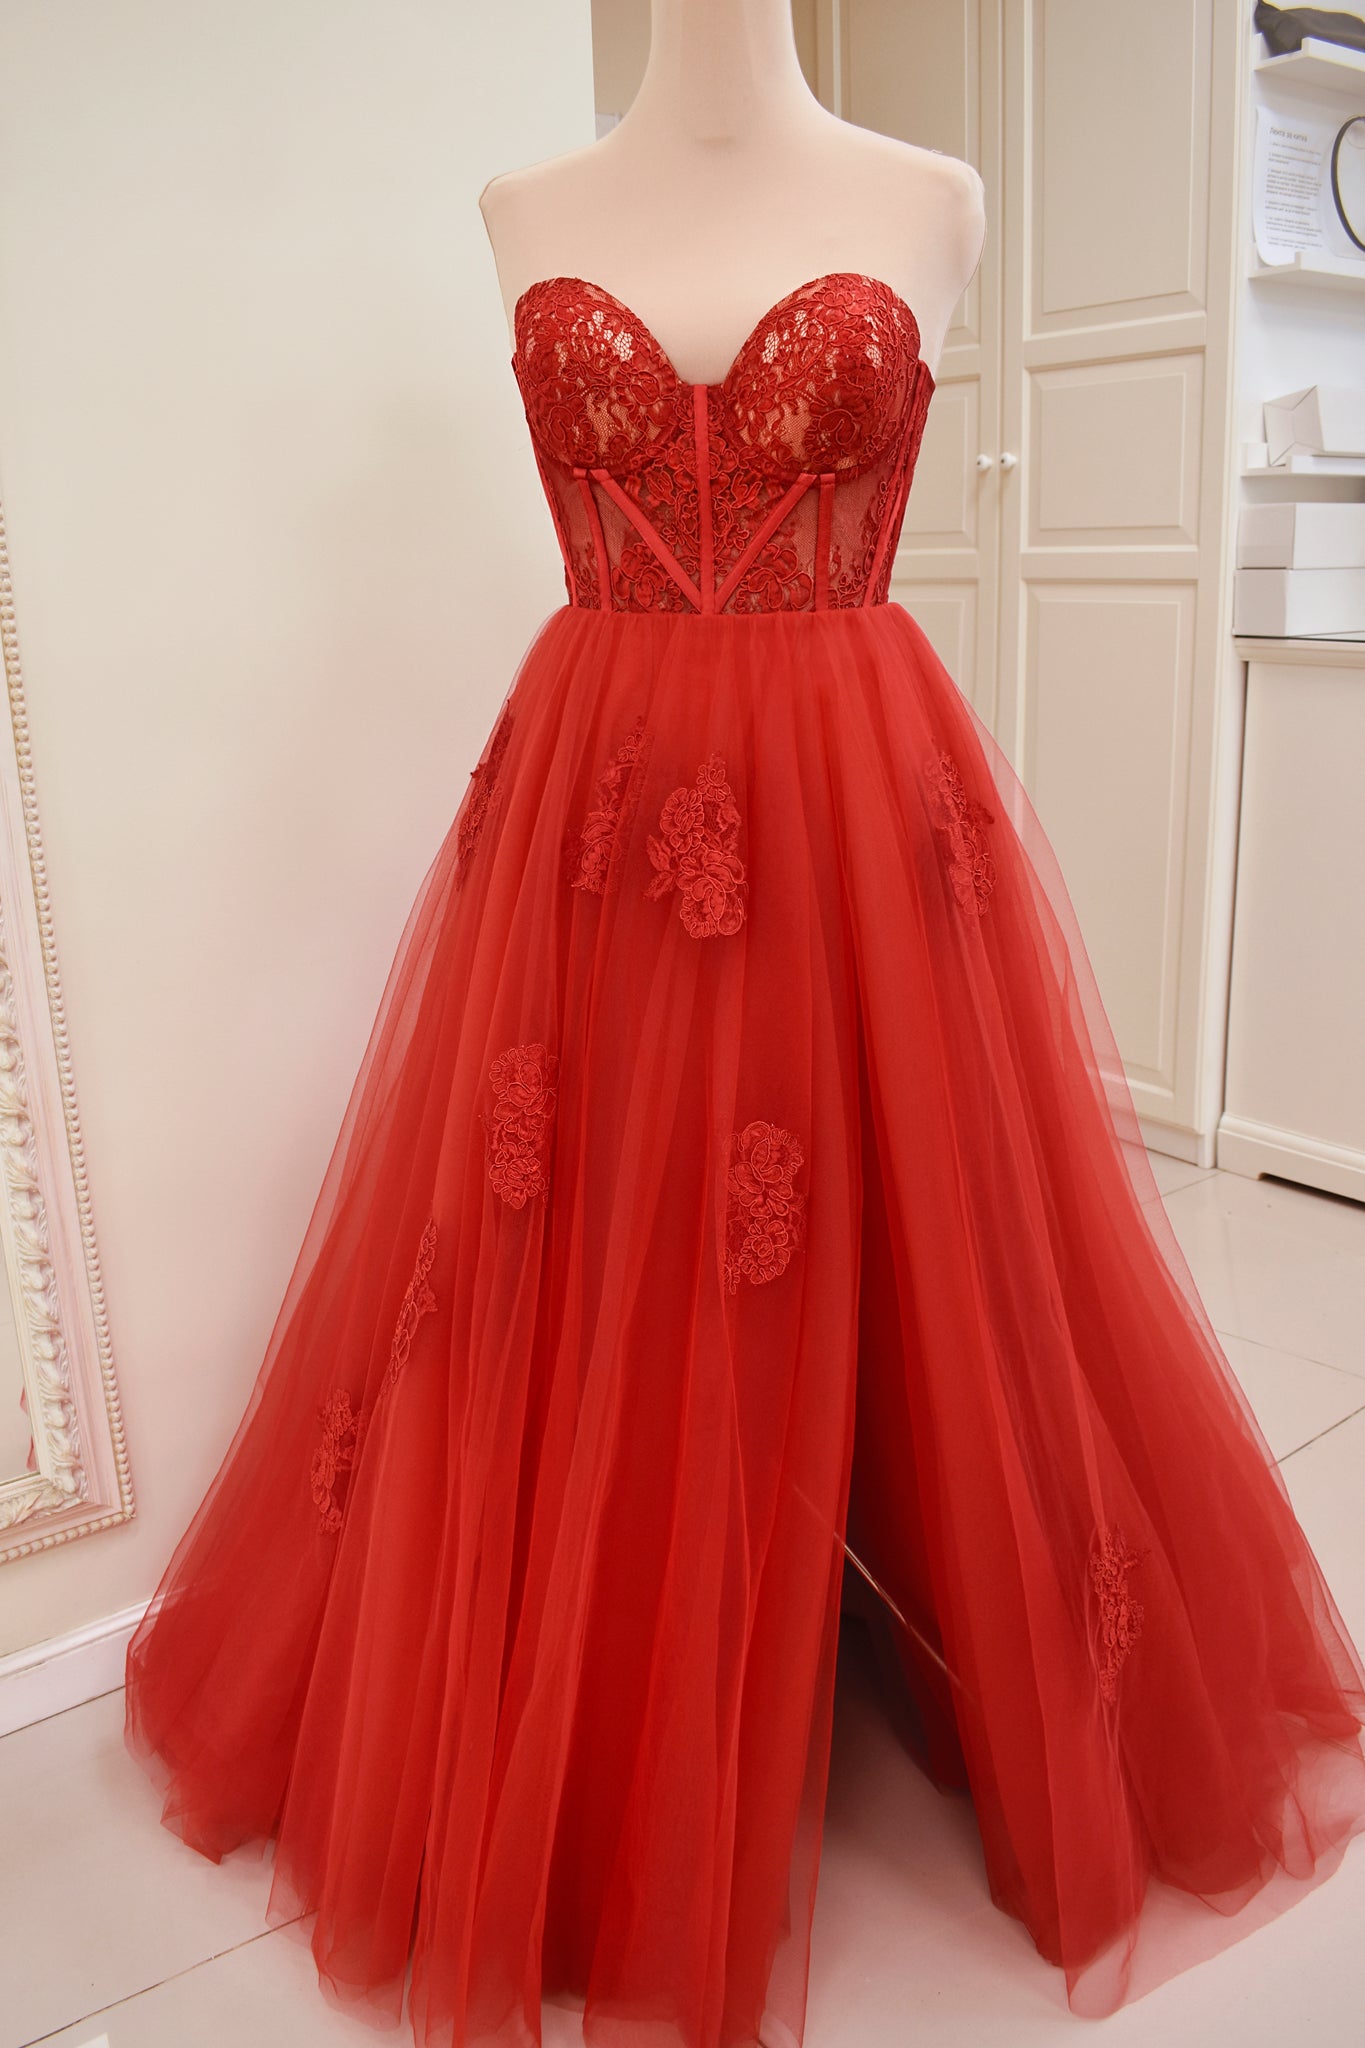 Enya | Red Lace Bodysuit